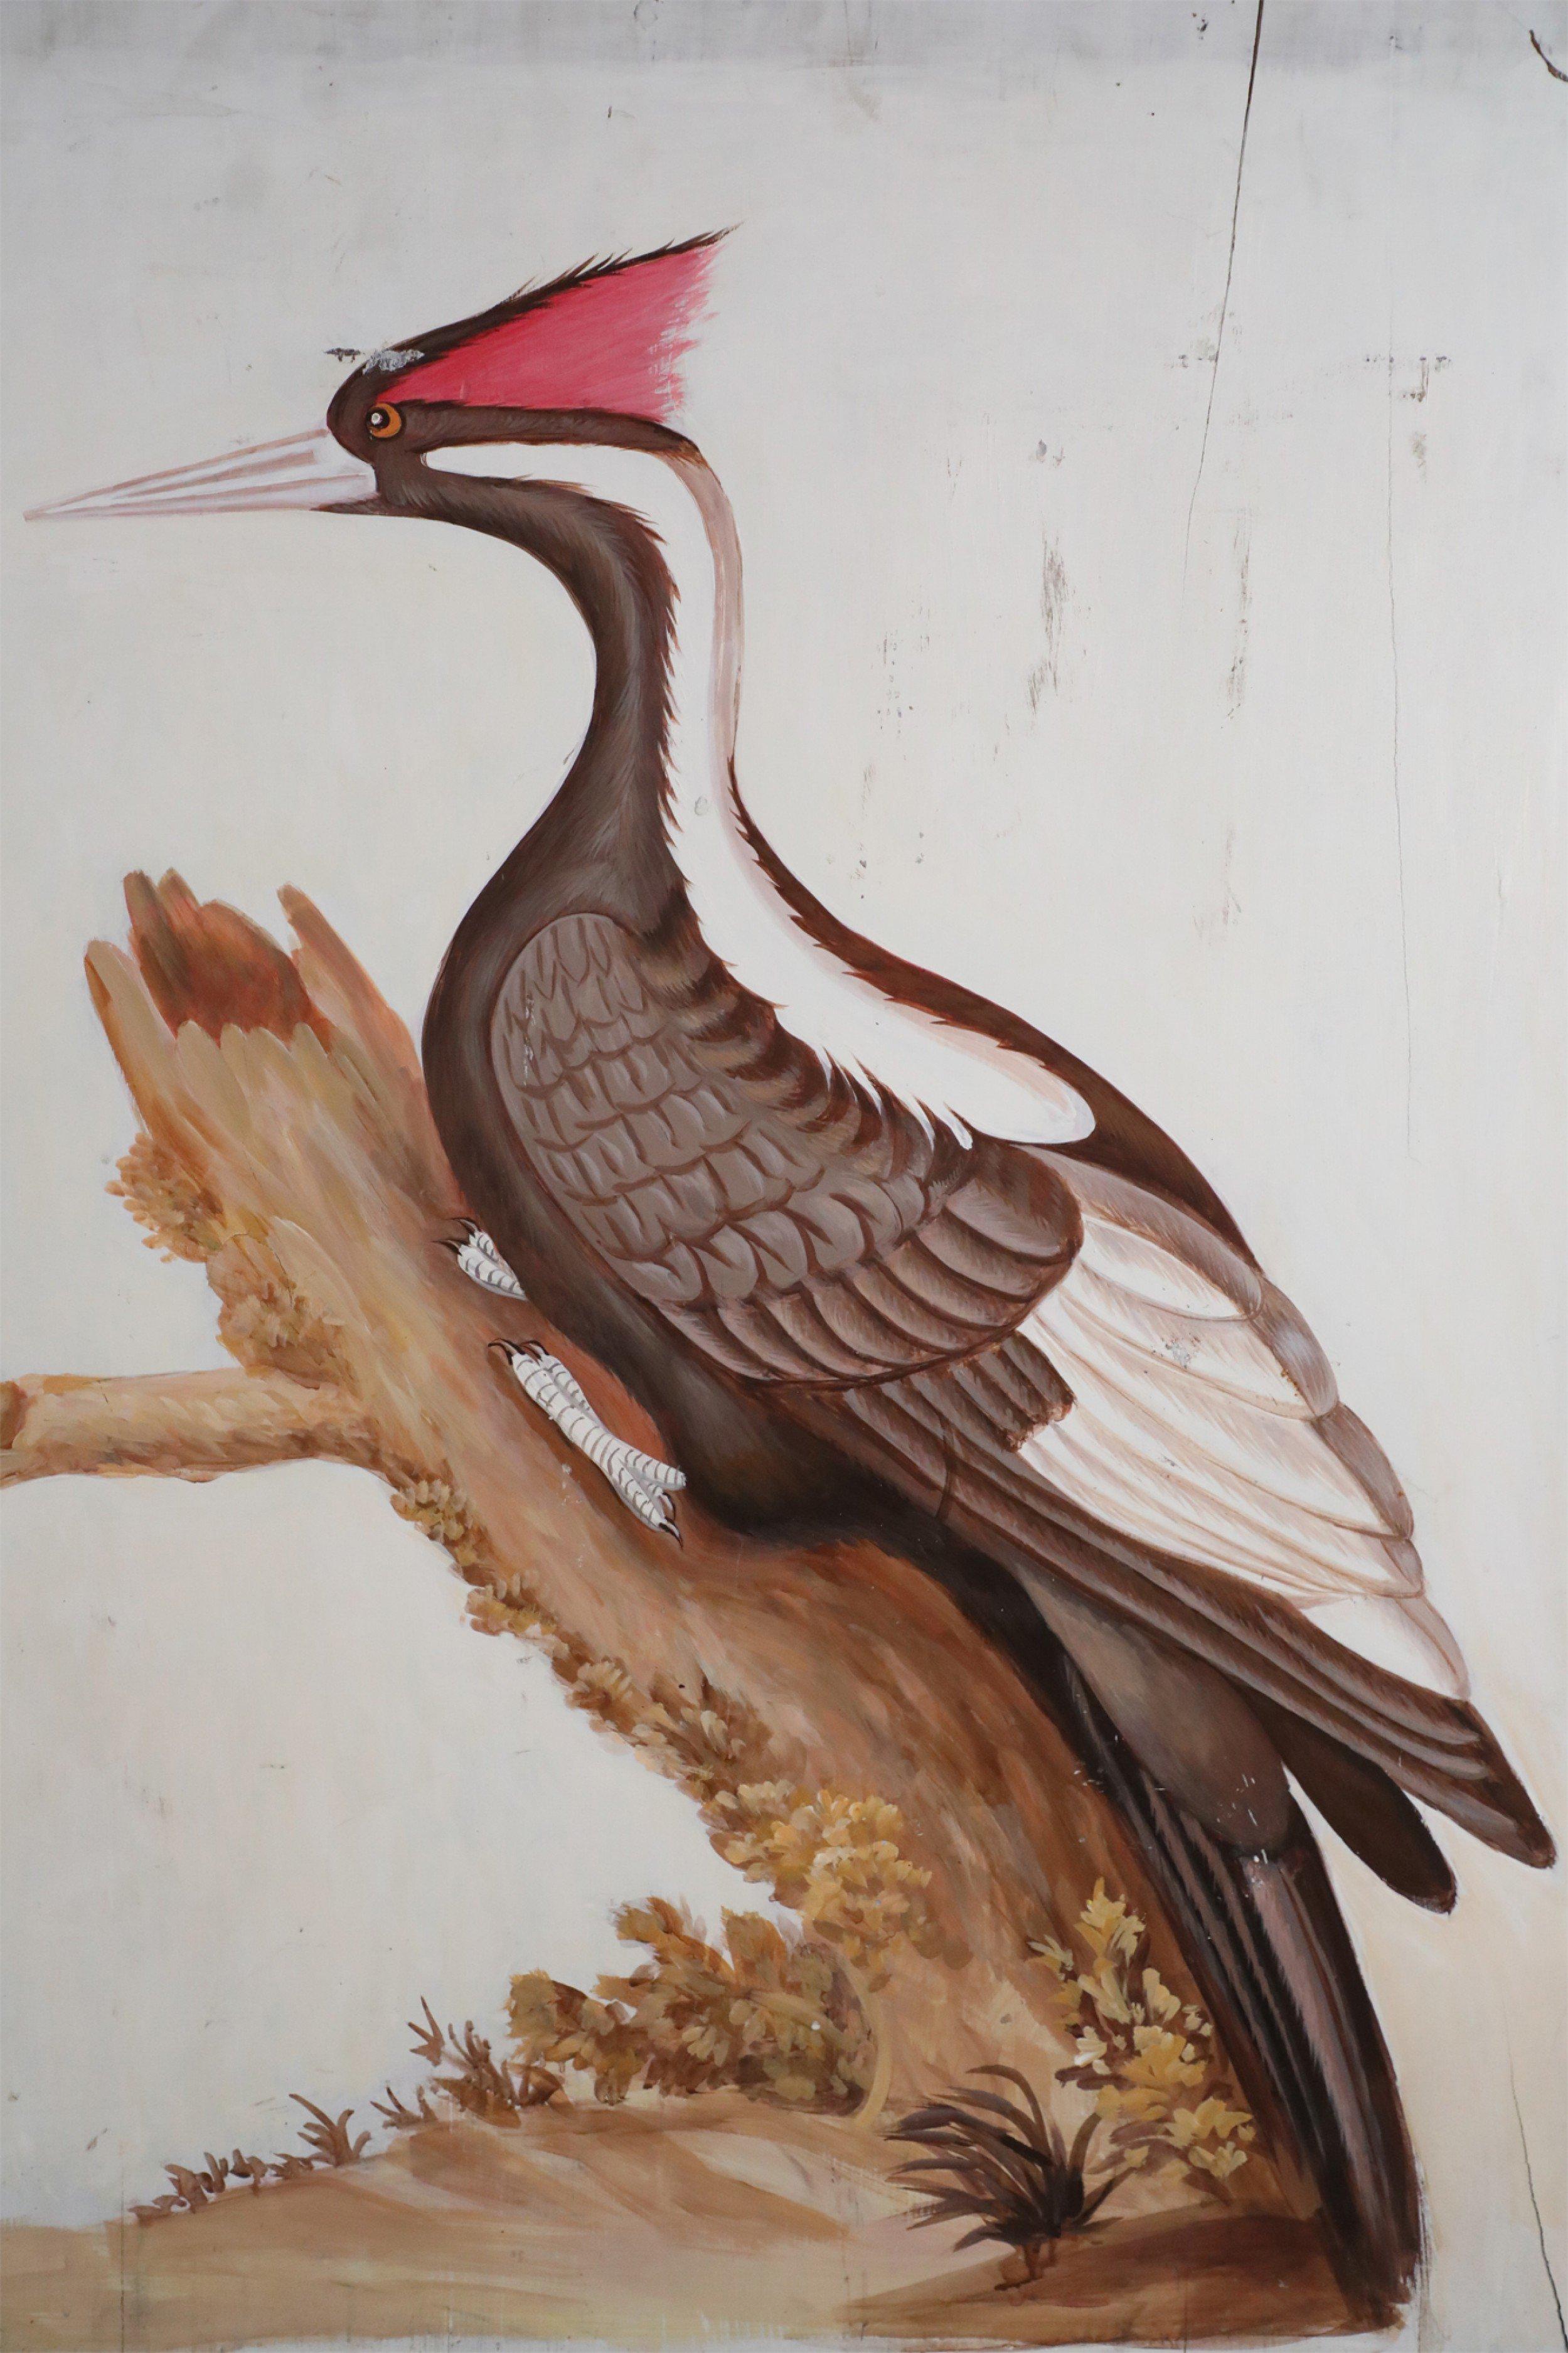 woodpecker symbolism